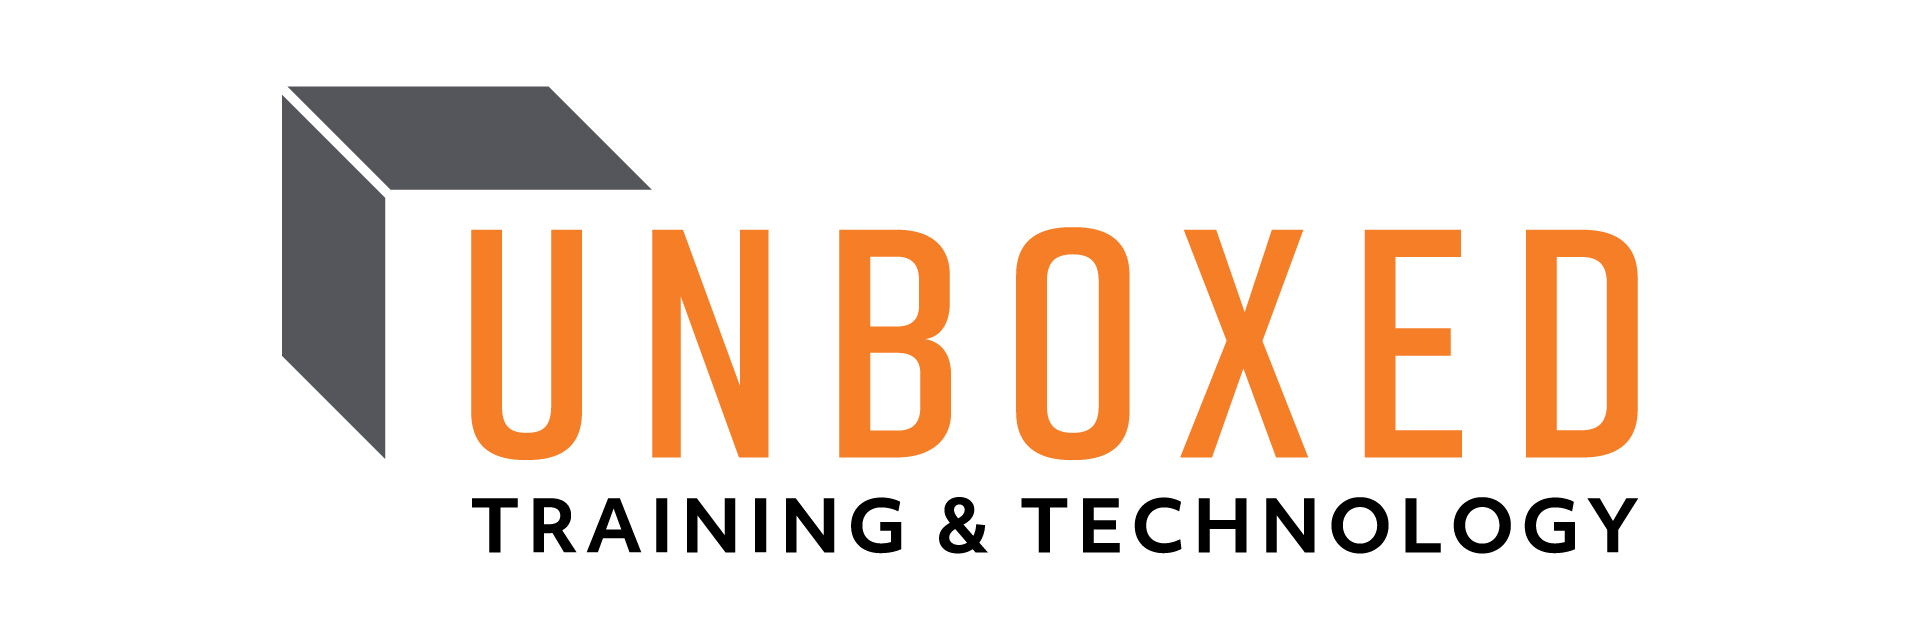 Unboxed Technology Company Logo